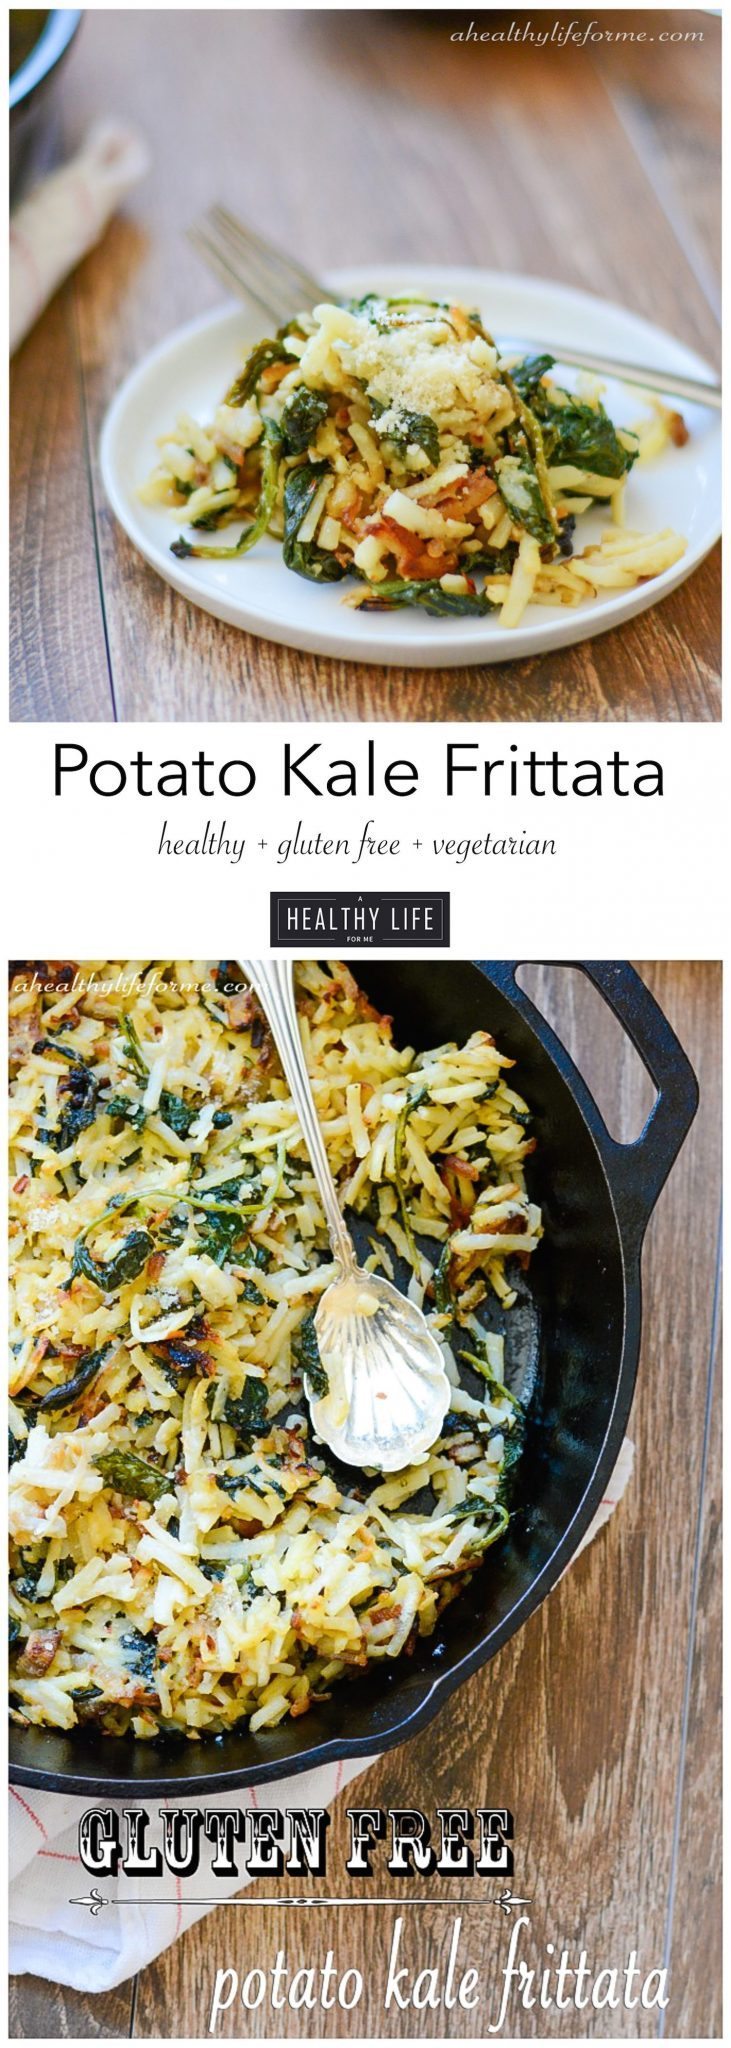 Potato Kale Frittata gluten Free vegetarian recipe | ahealthylifeforme.com